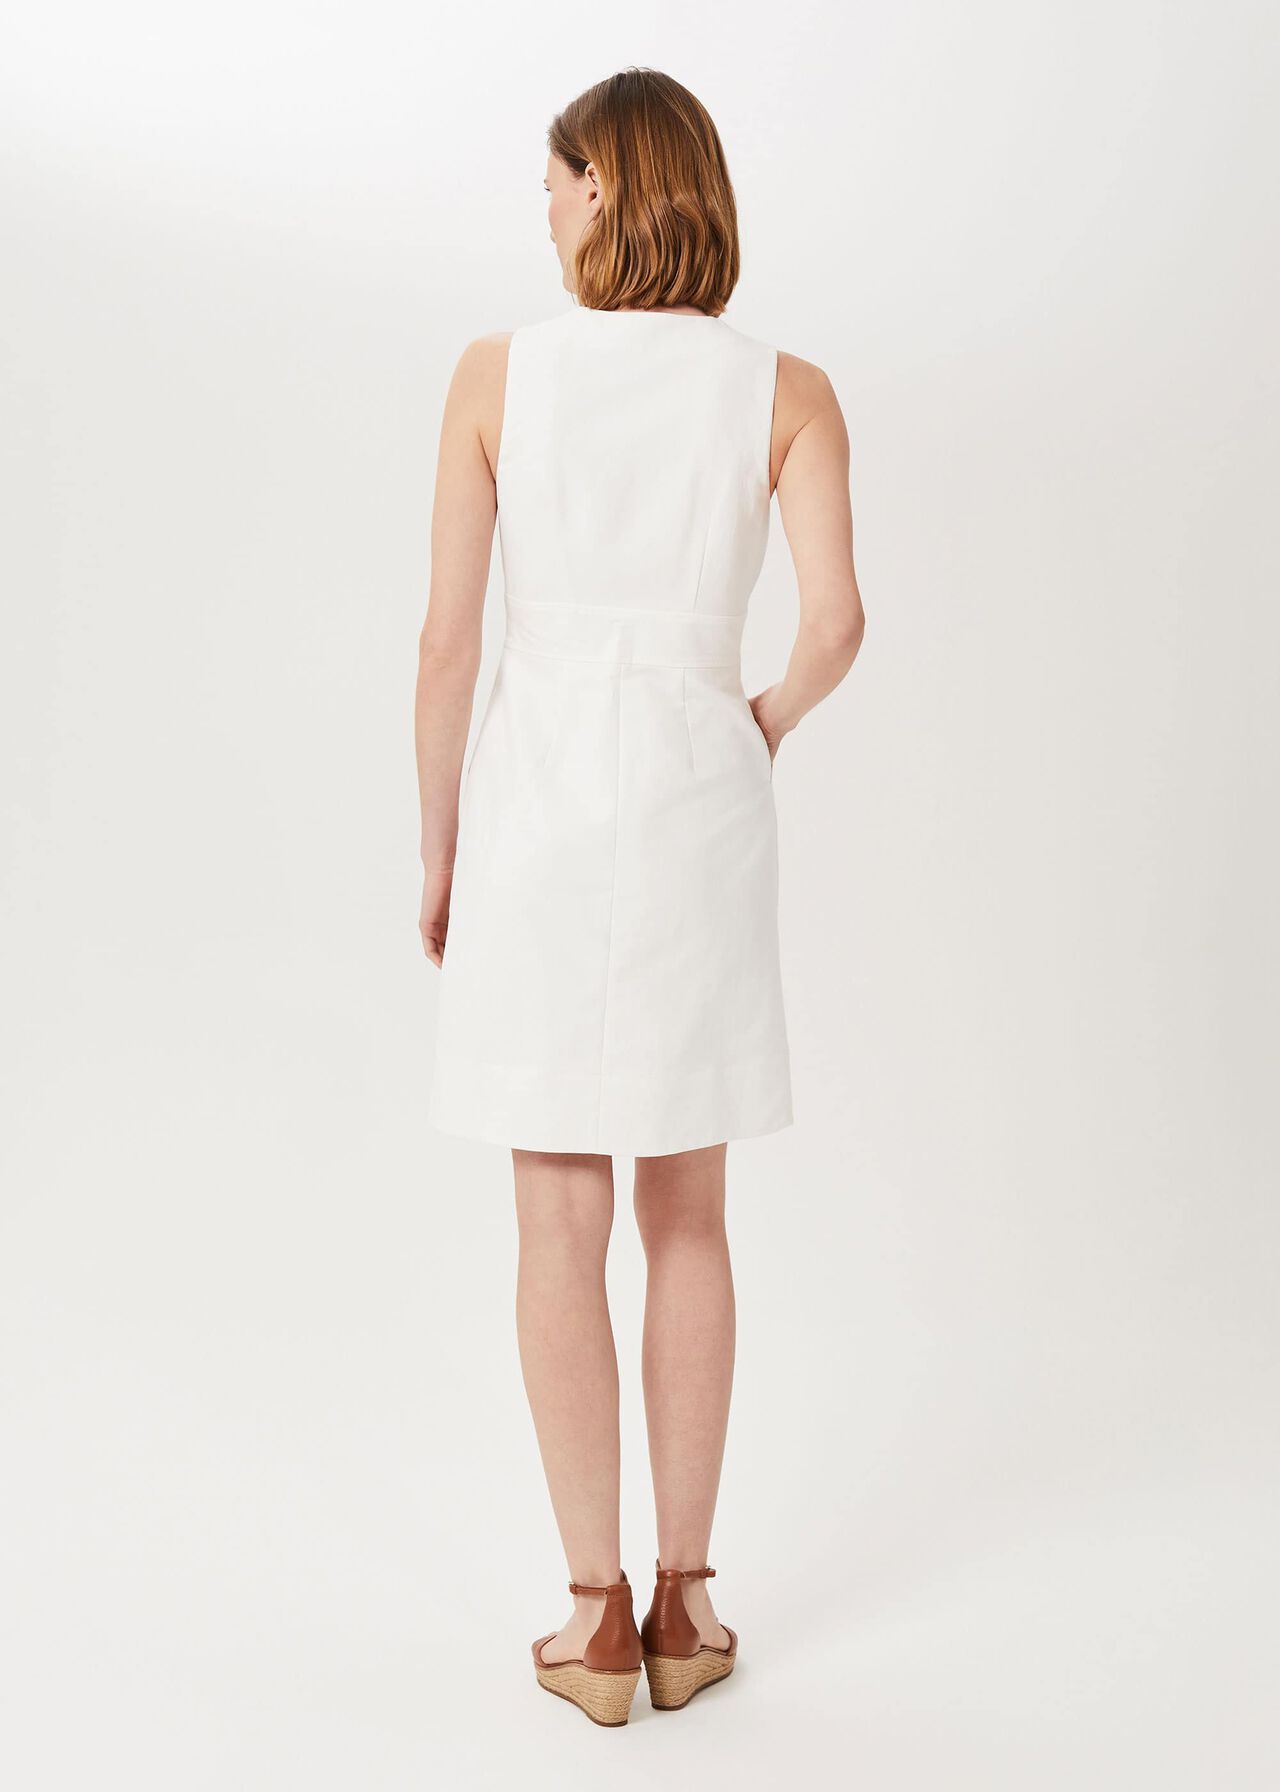 Lucie Cotton Hemp Shift Dress, White, hi-res